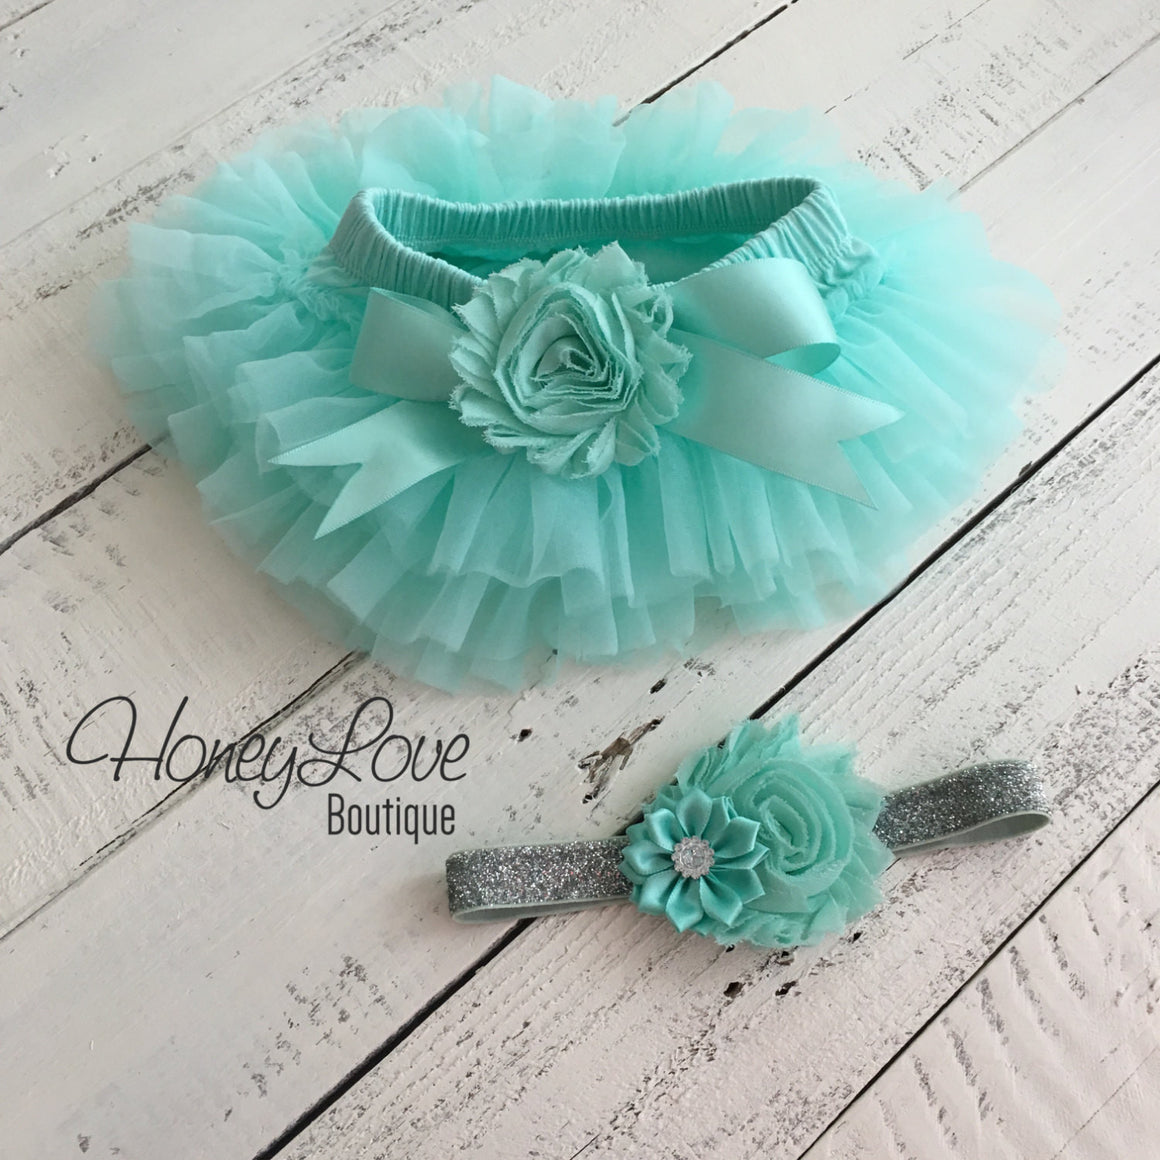 Mint/Aqua Embellished tutu skirt bloomers and silver glitter headband - HoneyLoveBoutique